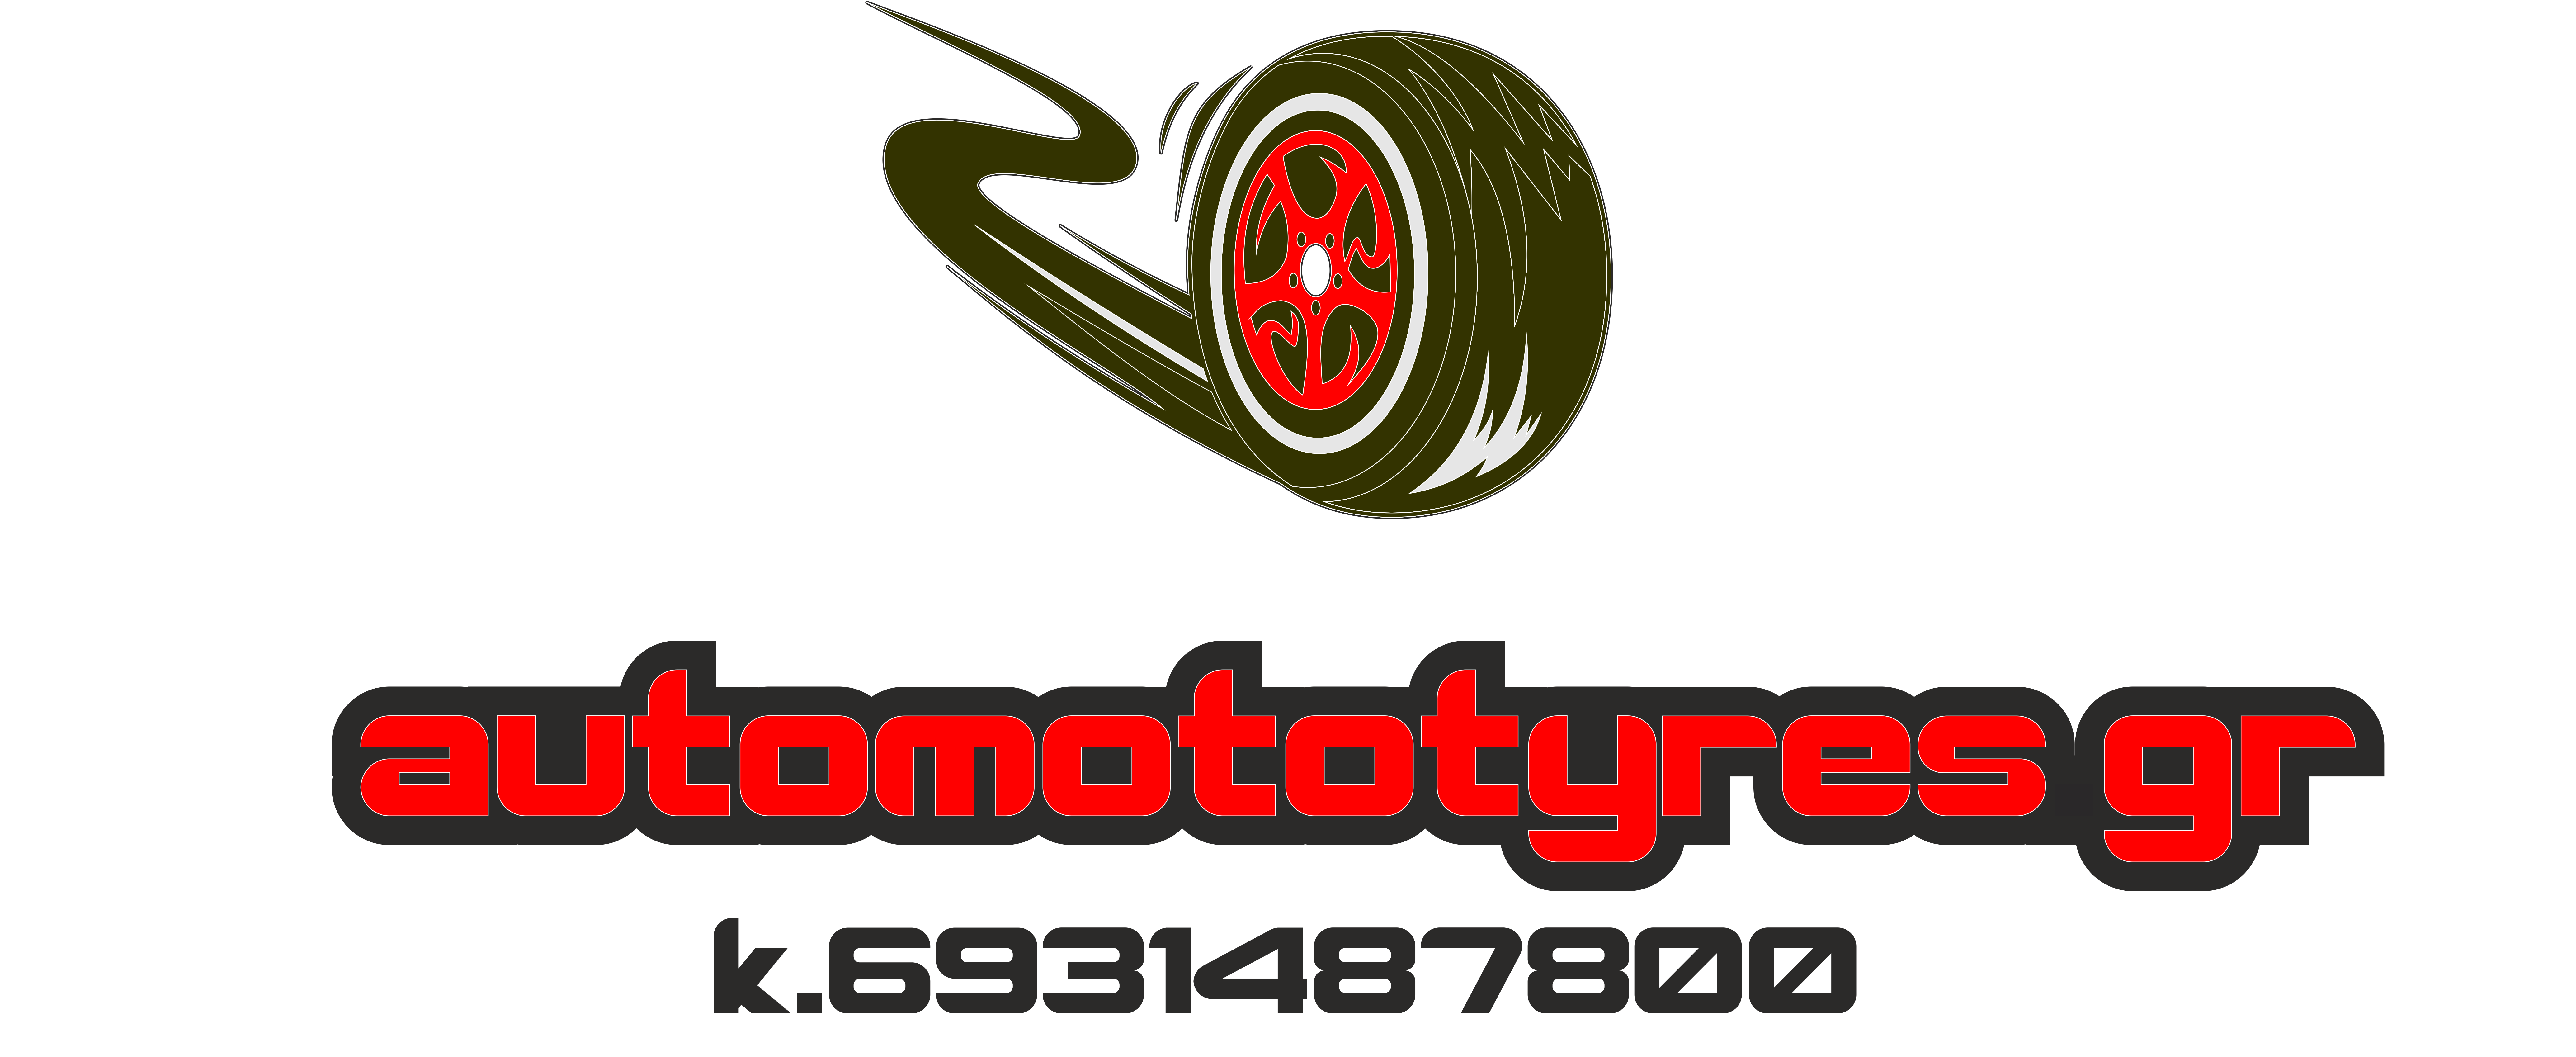 Automototyres.gr - Μοναδικές τιμές ελαστικών